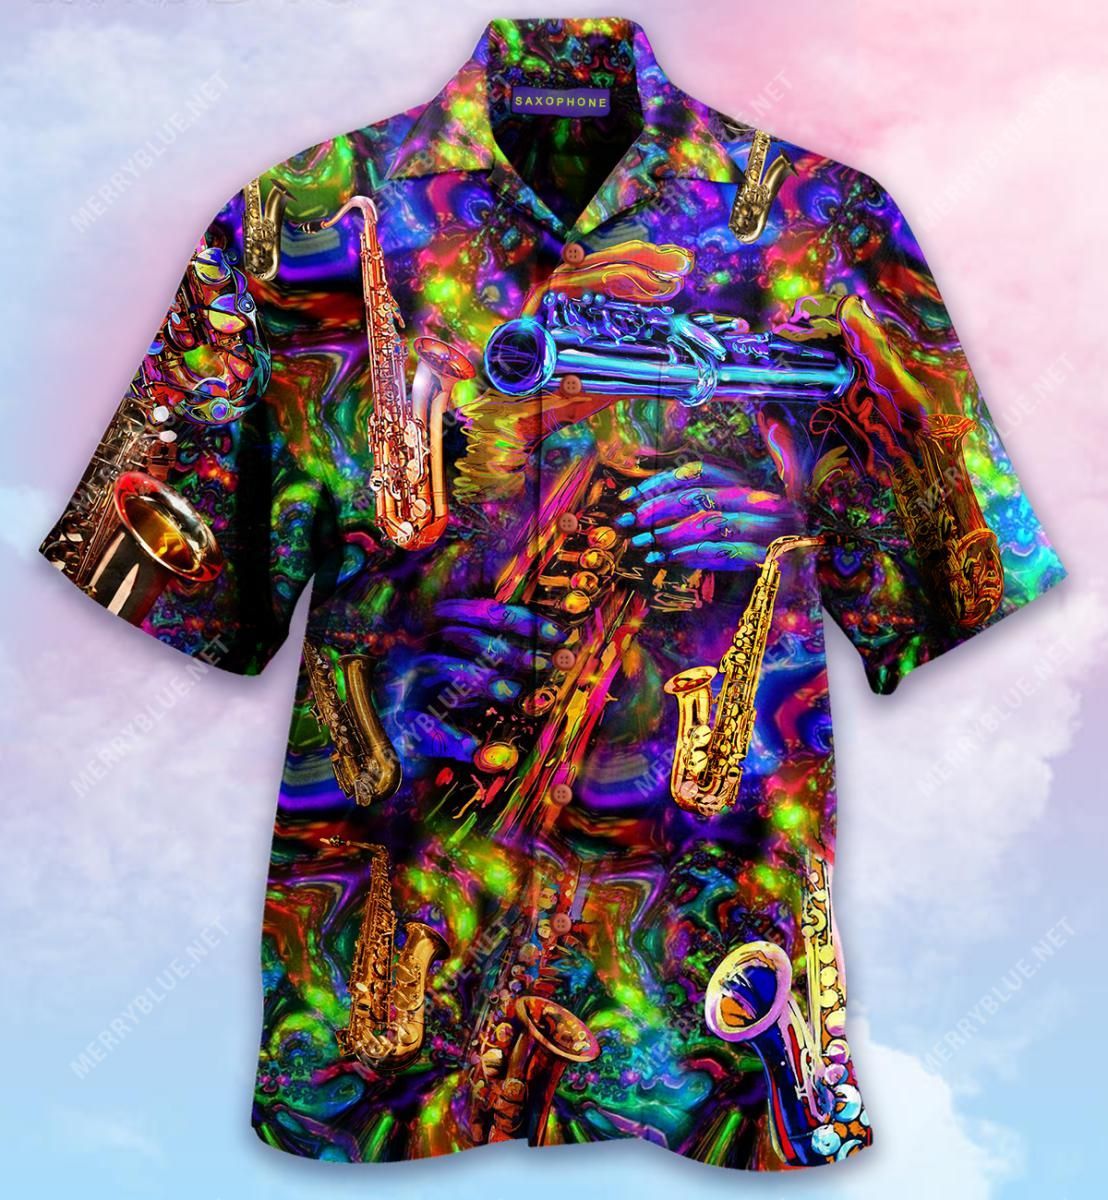 im saxy and i know it saxophonist aloha hawaiian shirt colorful short sleeve summer beach casual shirt for men and women nrrzi